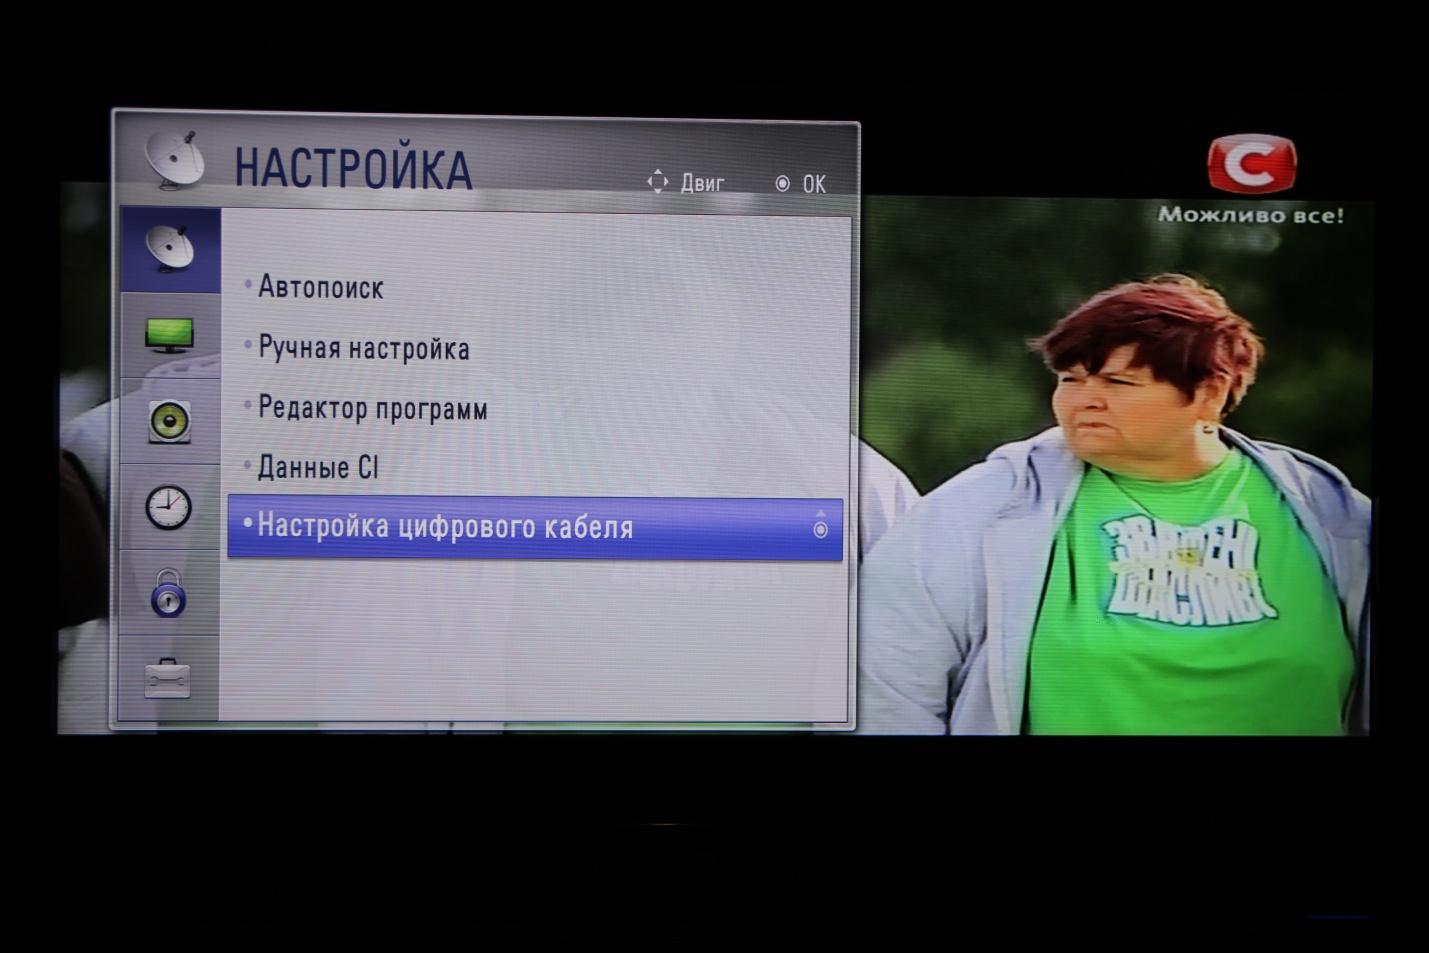 Setting up TV on LG,2 - Internet provider Briz in Odesa